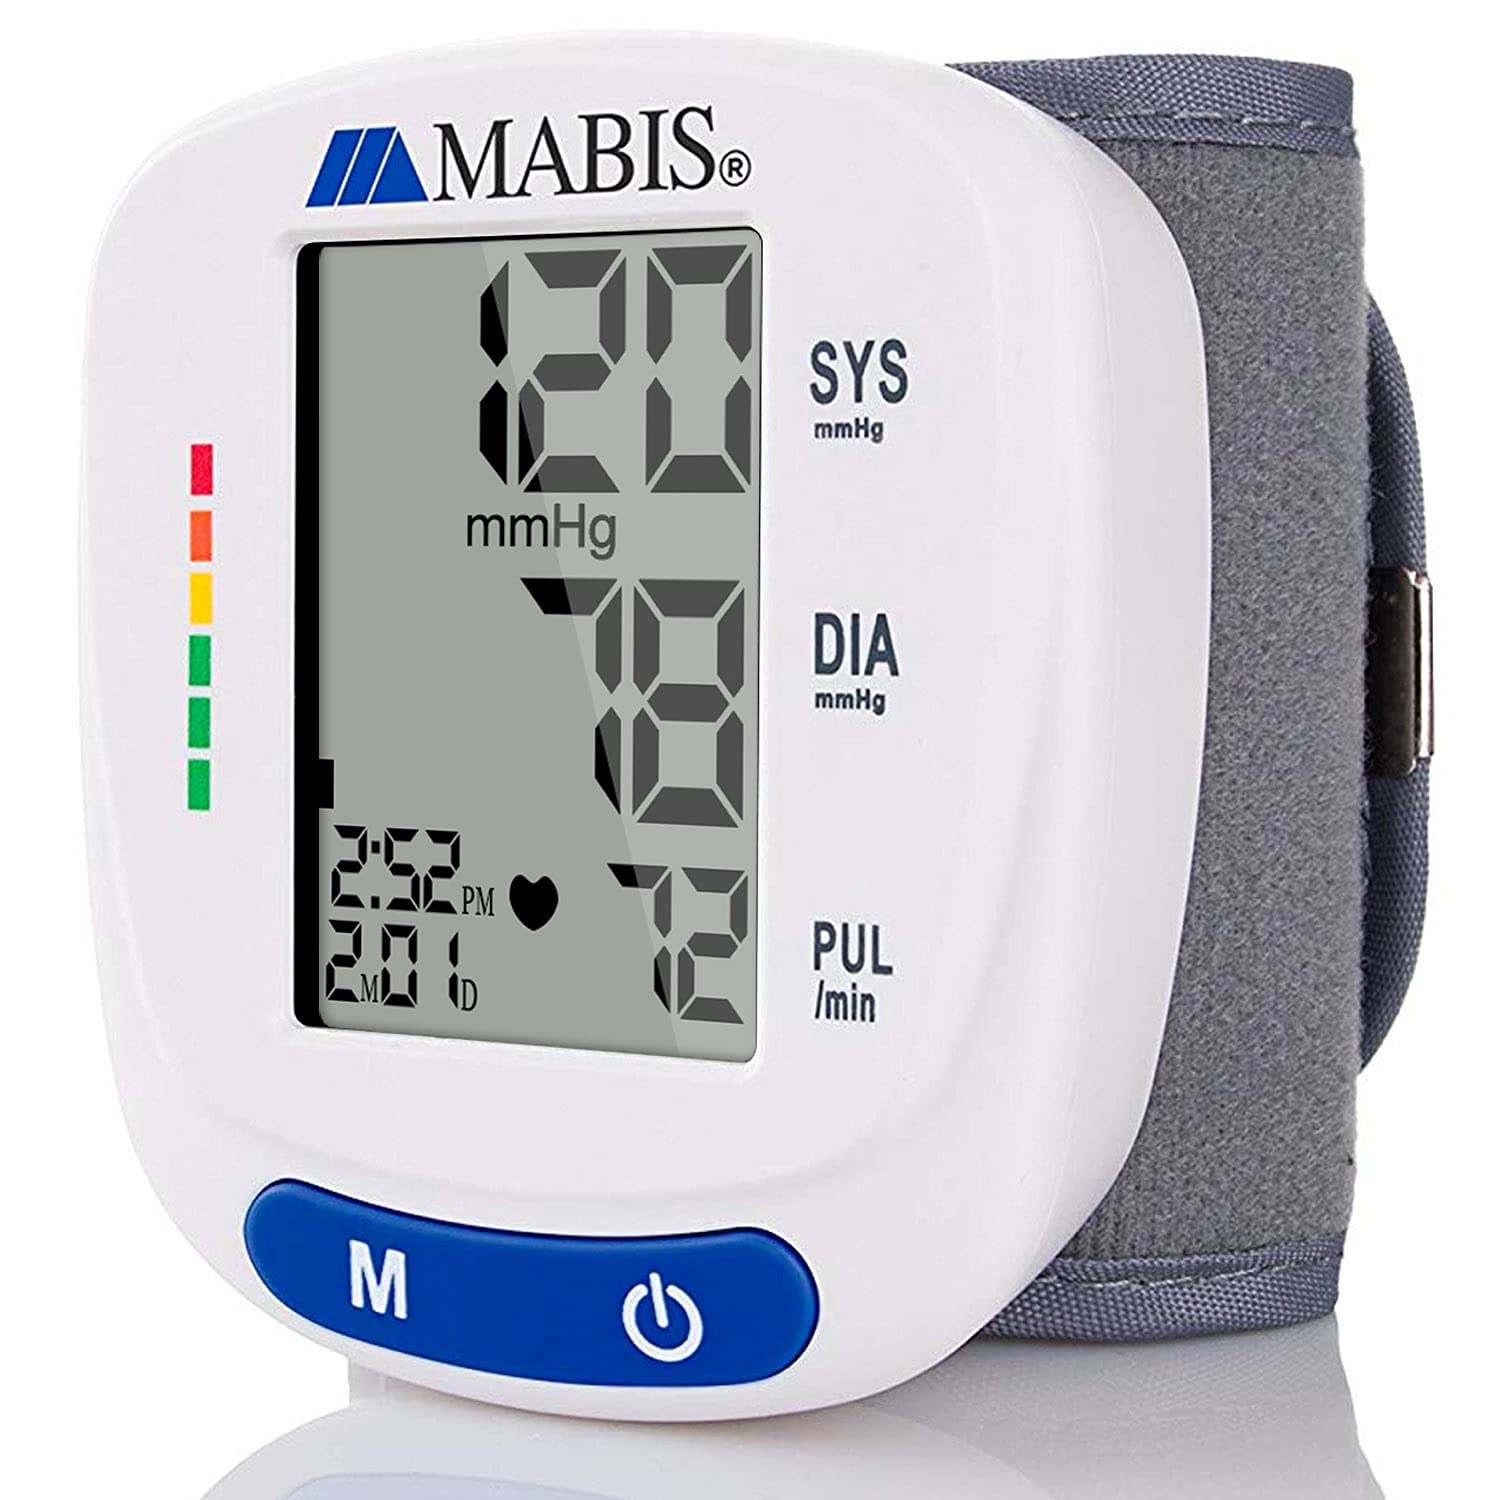 HealthSmart Digital Standard Wrist Blood Pressure Monitor with